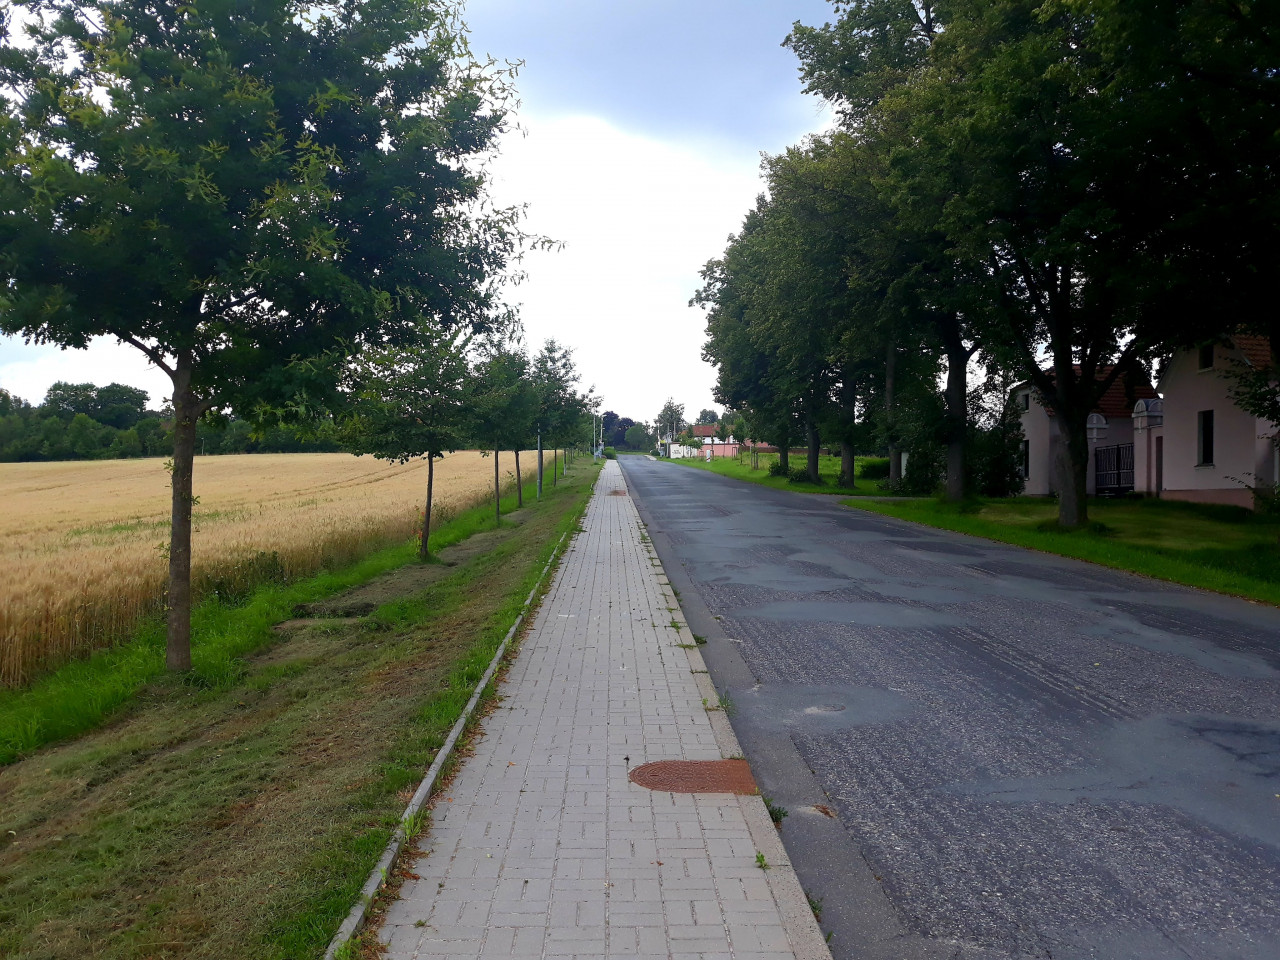 Ulice Pražská, vpravo tamní hřbitov. (16.7.2021)